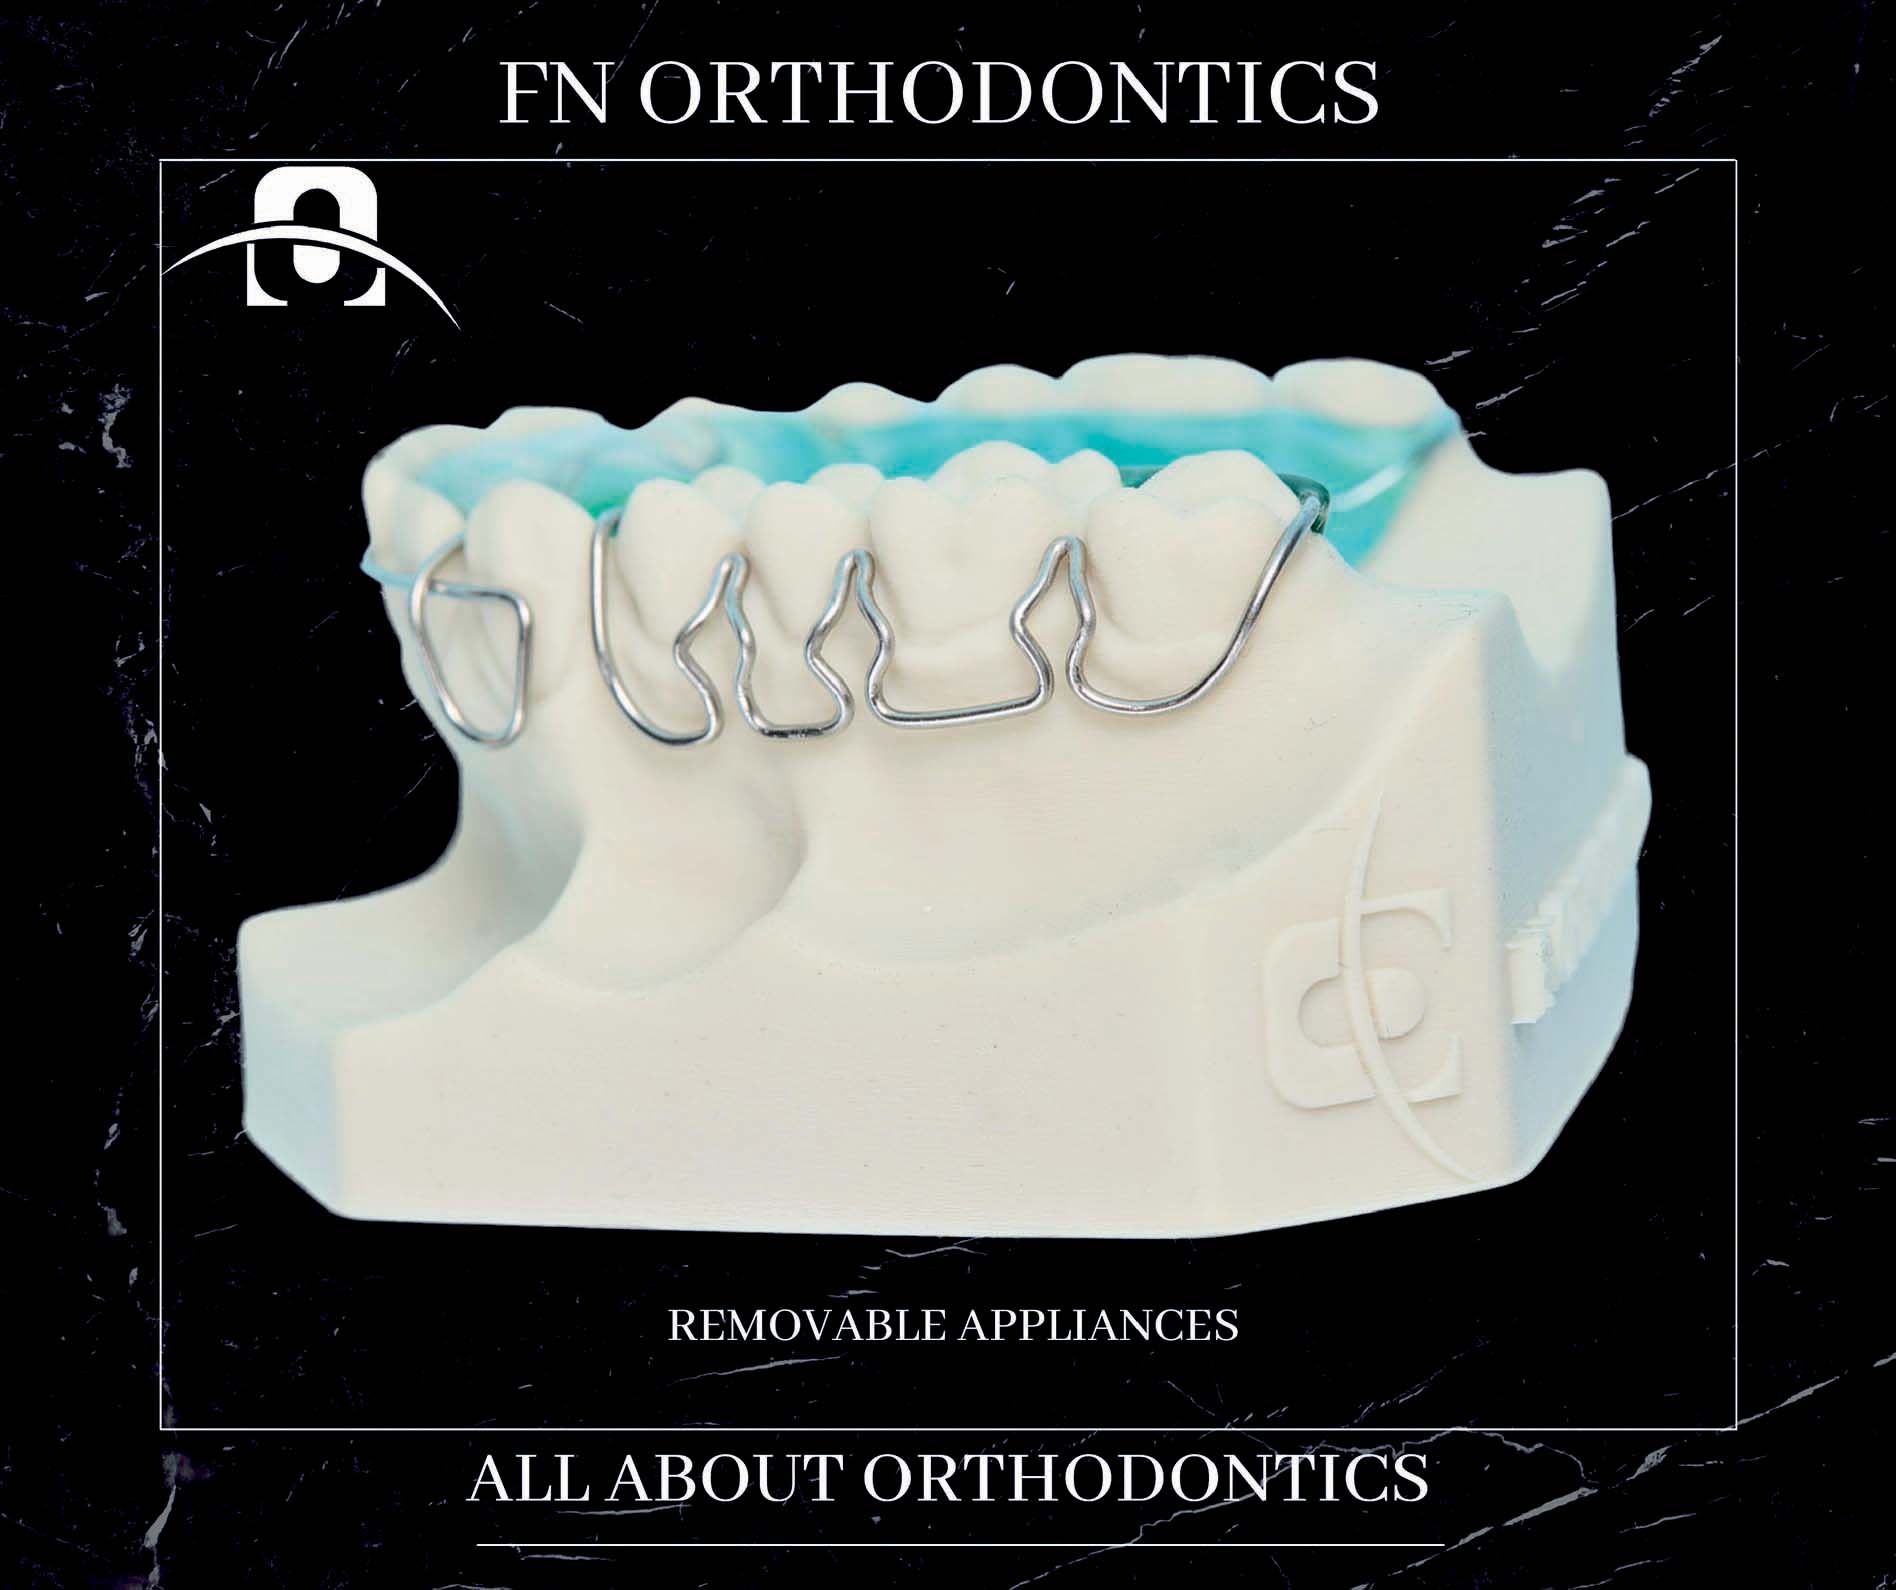 Removable Appliances - Fn Orthodontics